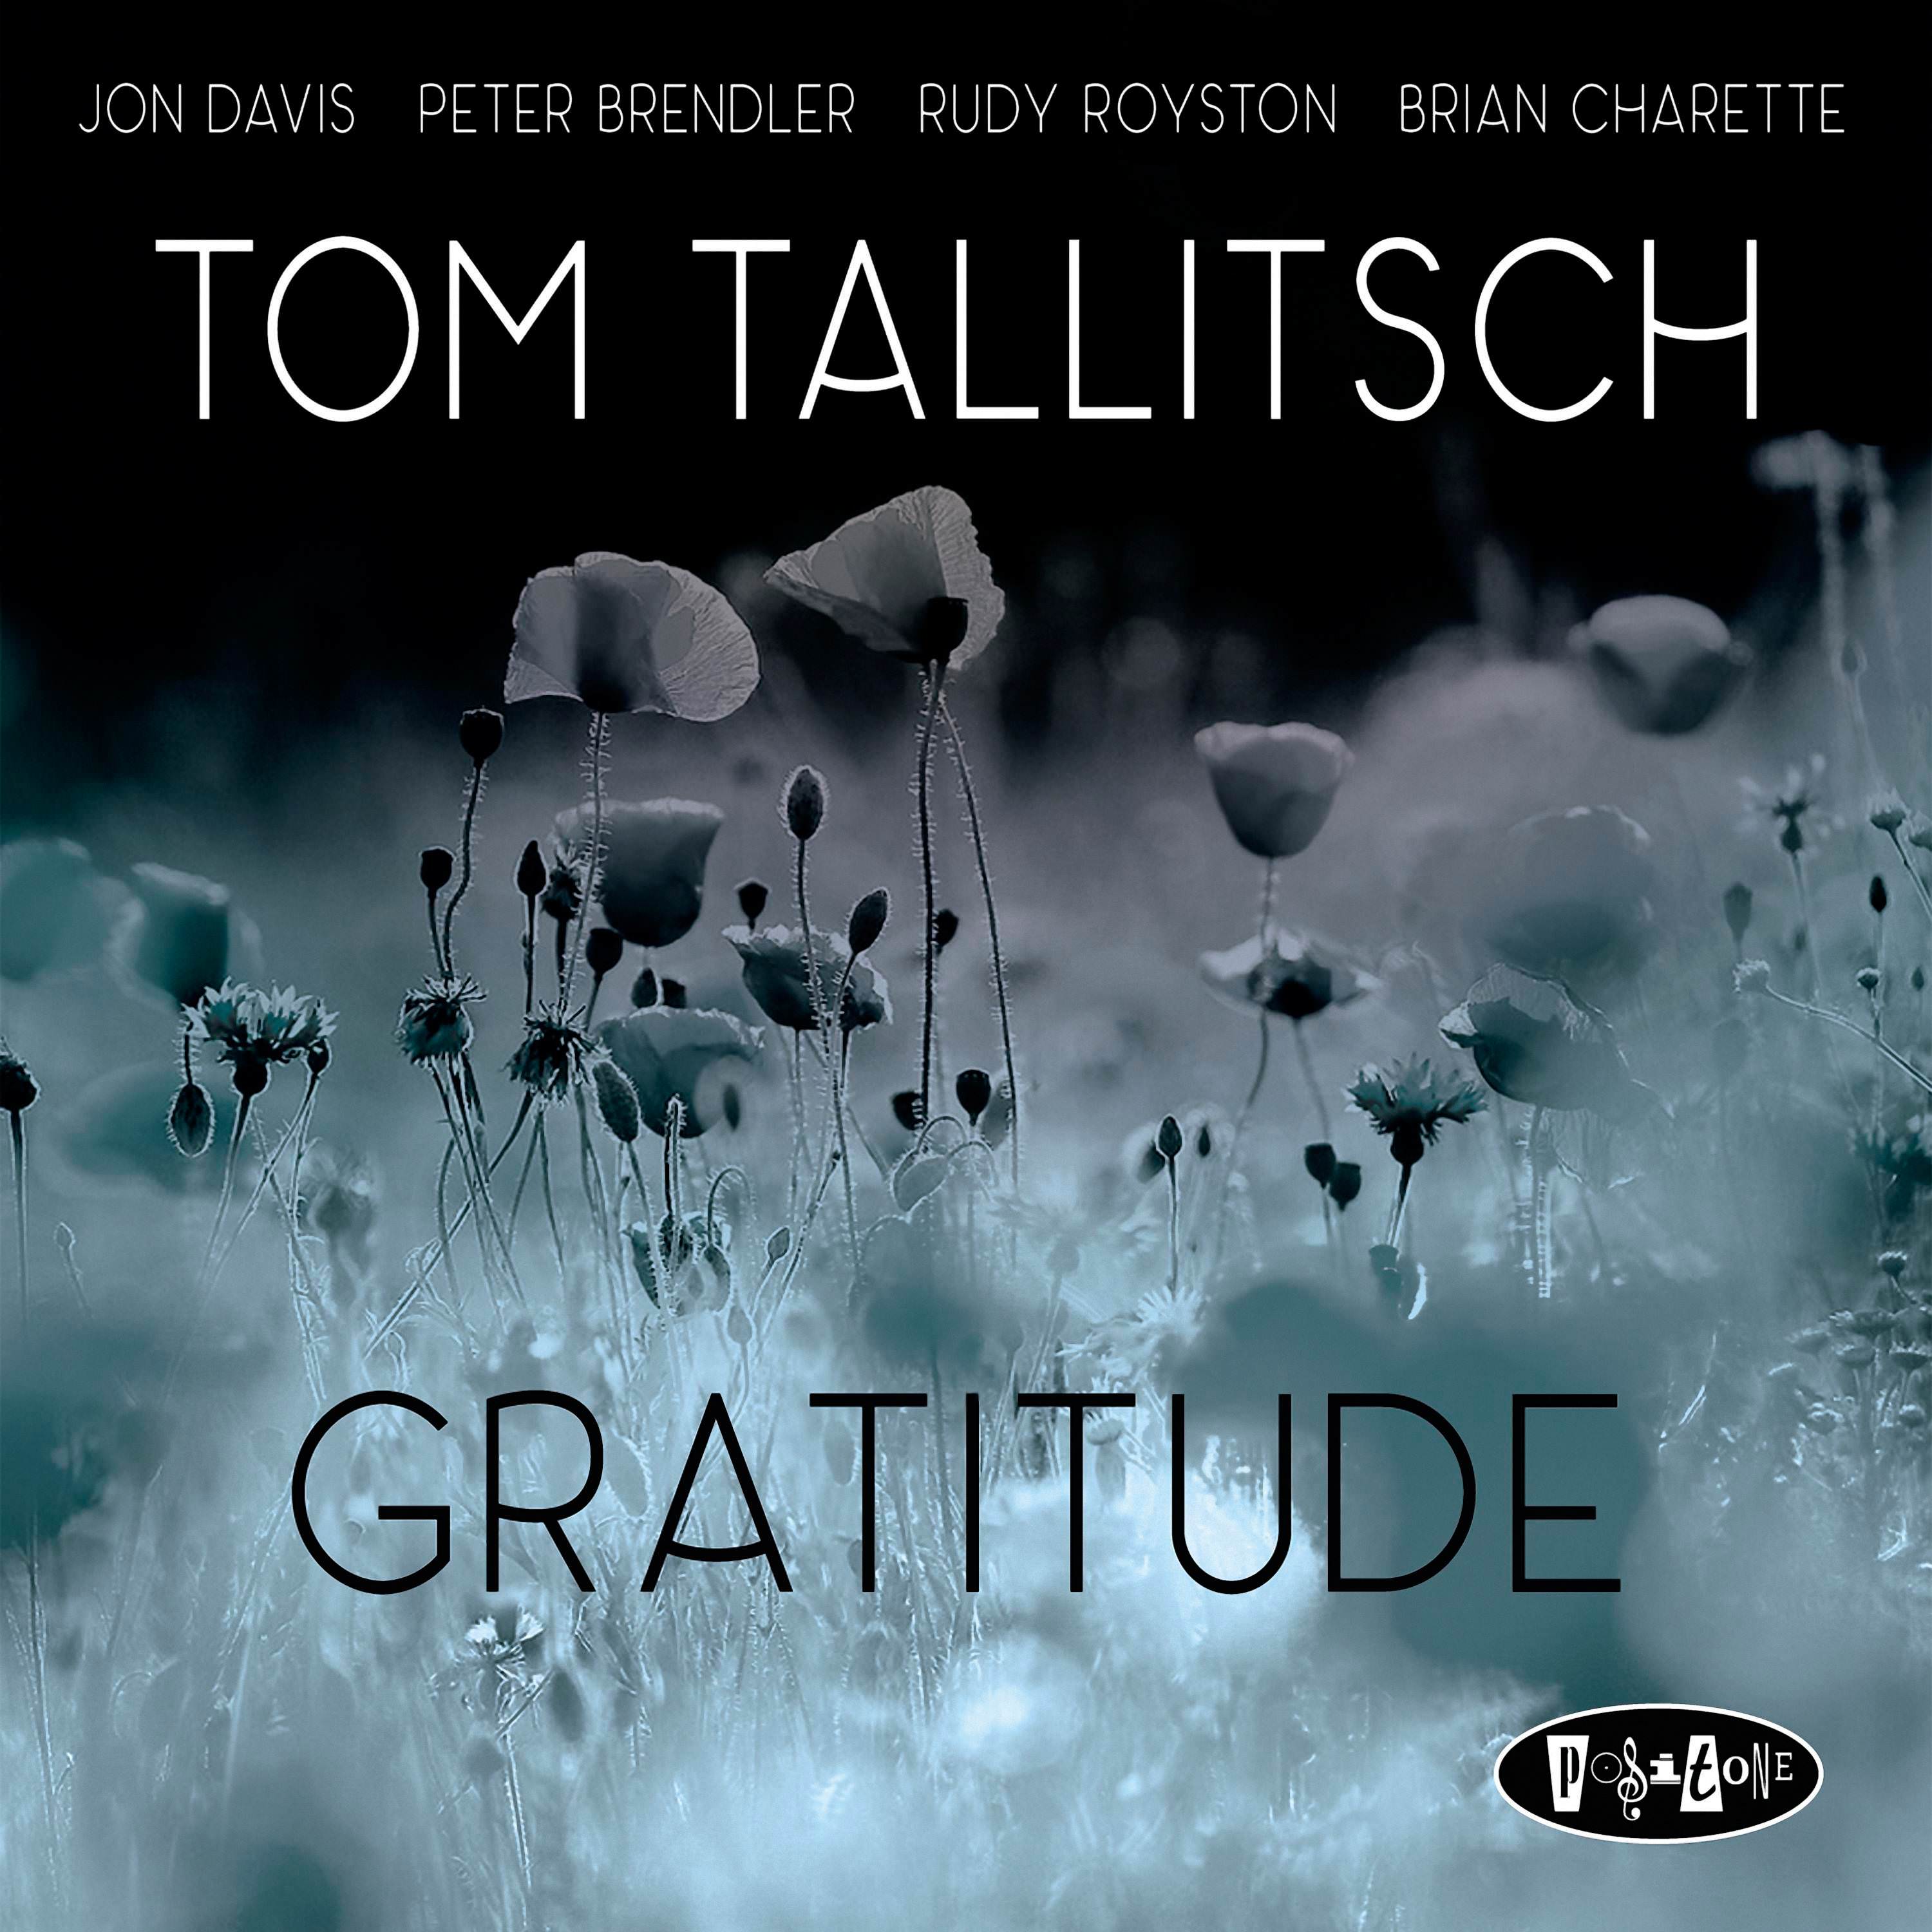 Tom Tallitsch - Gratitude (2016) [HDTracks FLAC 24bit/88,2kHz]